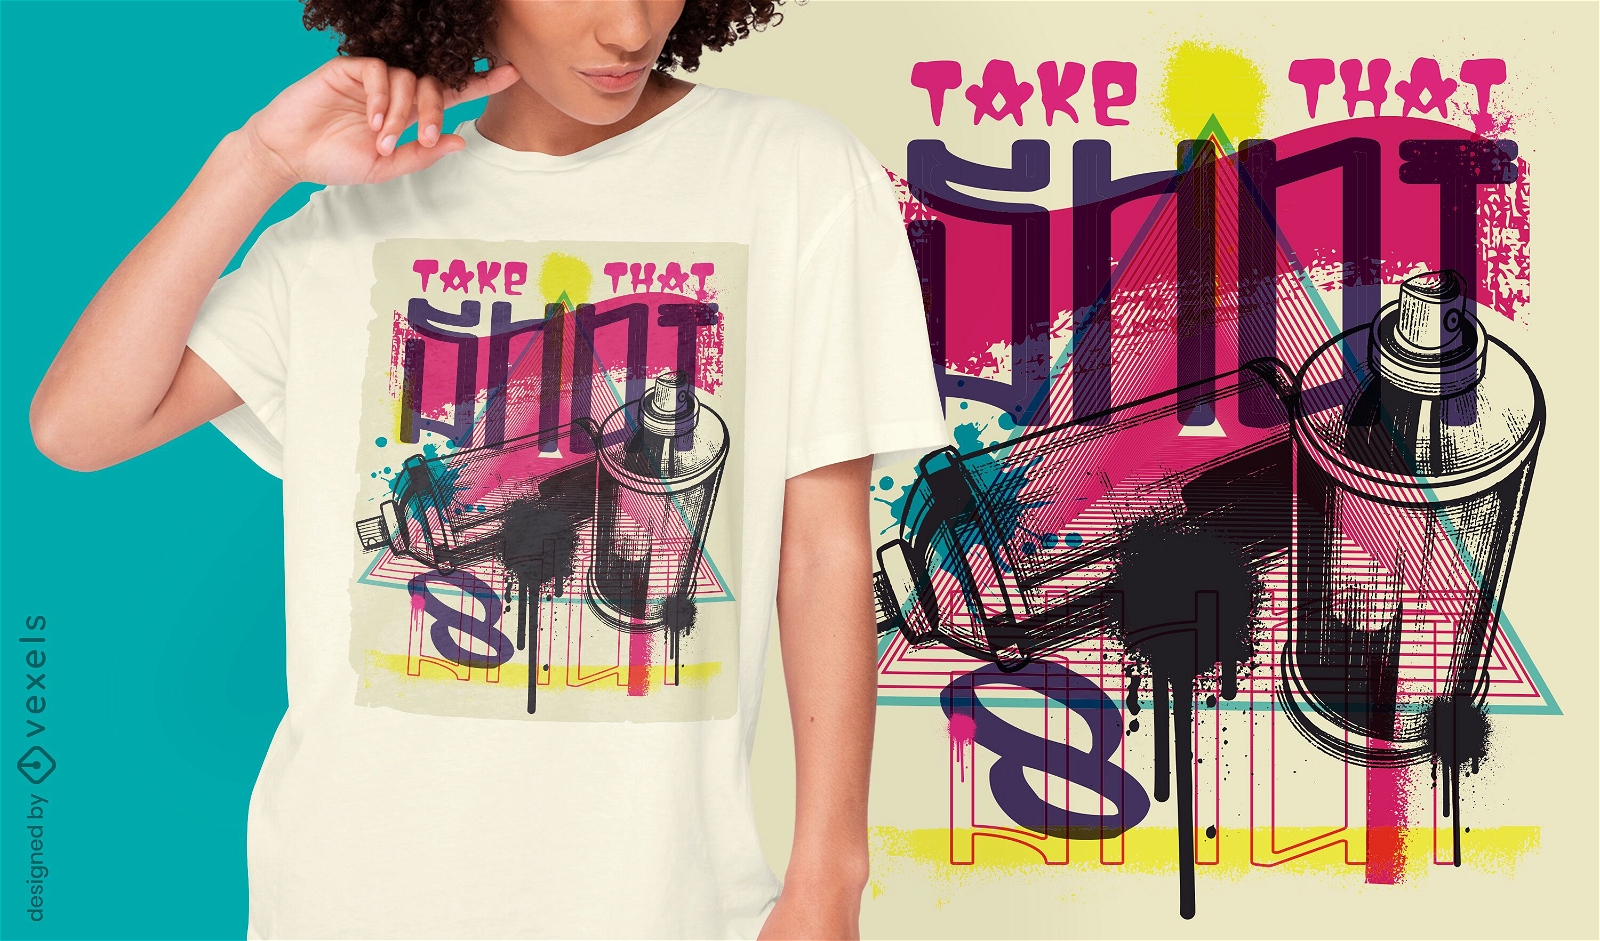 Spr?hfarbe urbanes Graffiti-T-Shirt Design